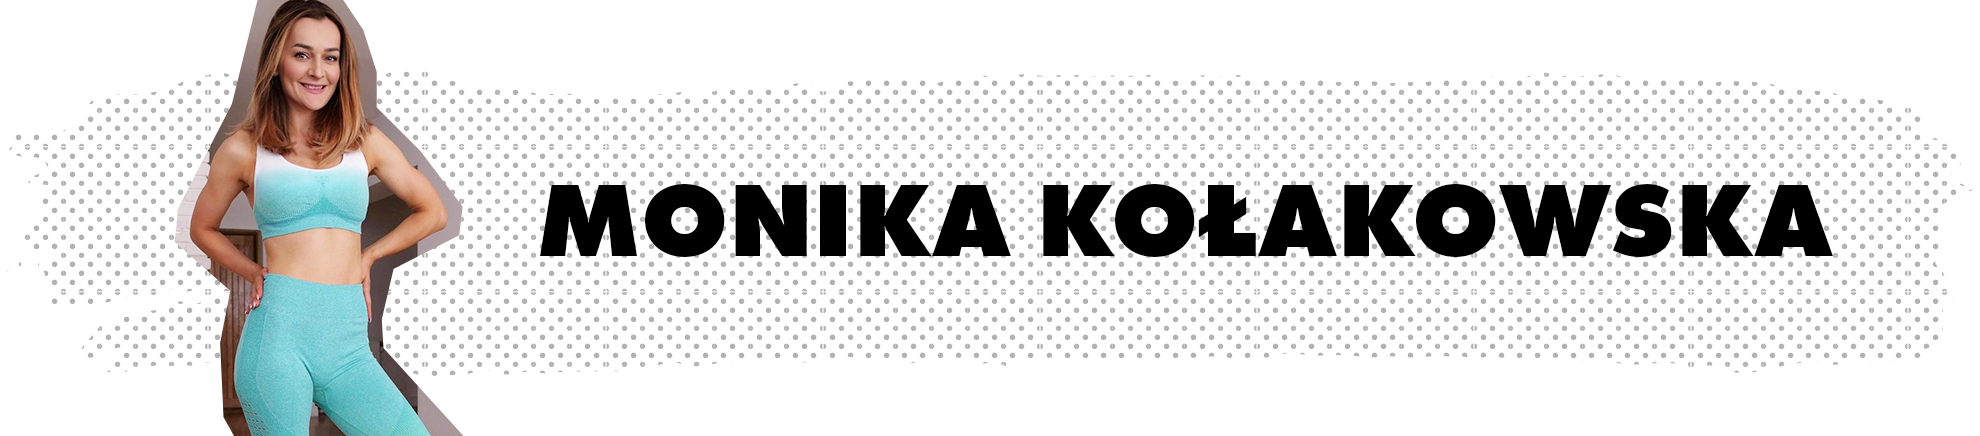 Monika Kołakowska - Carpatree brand ambassador